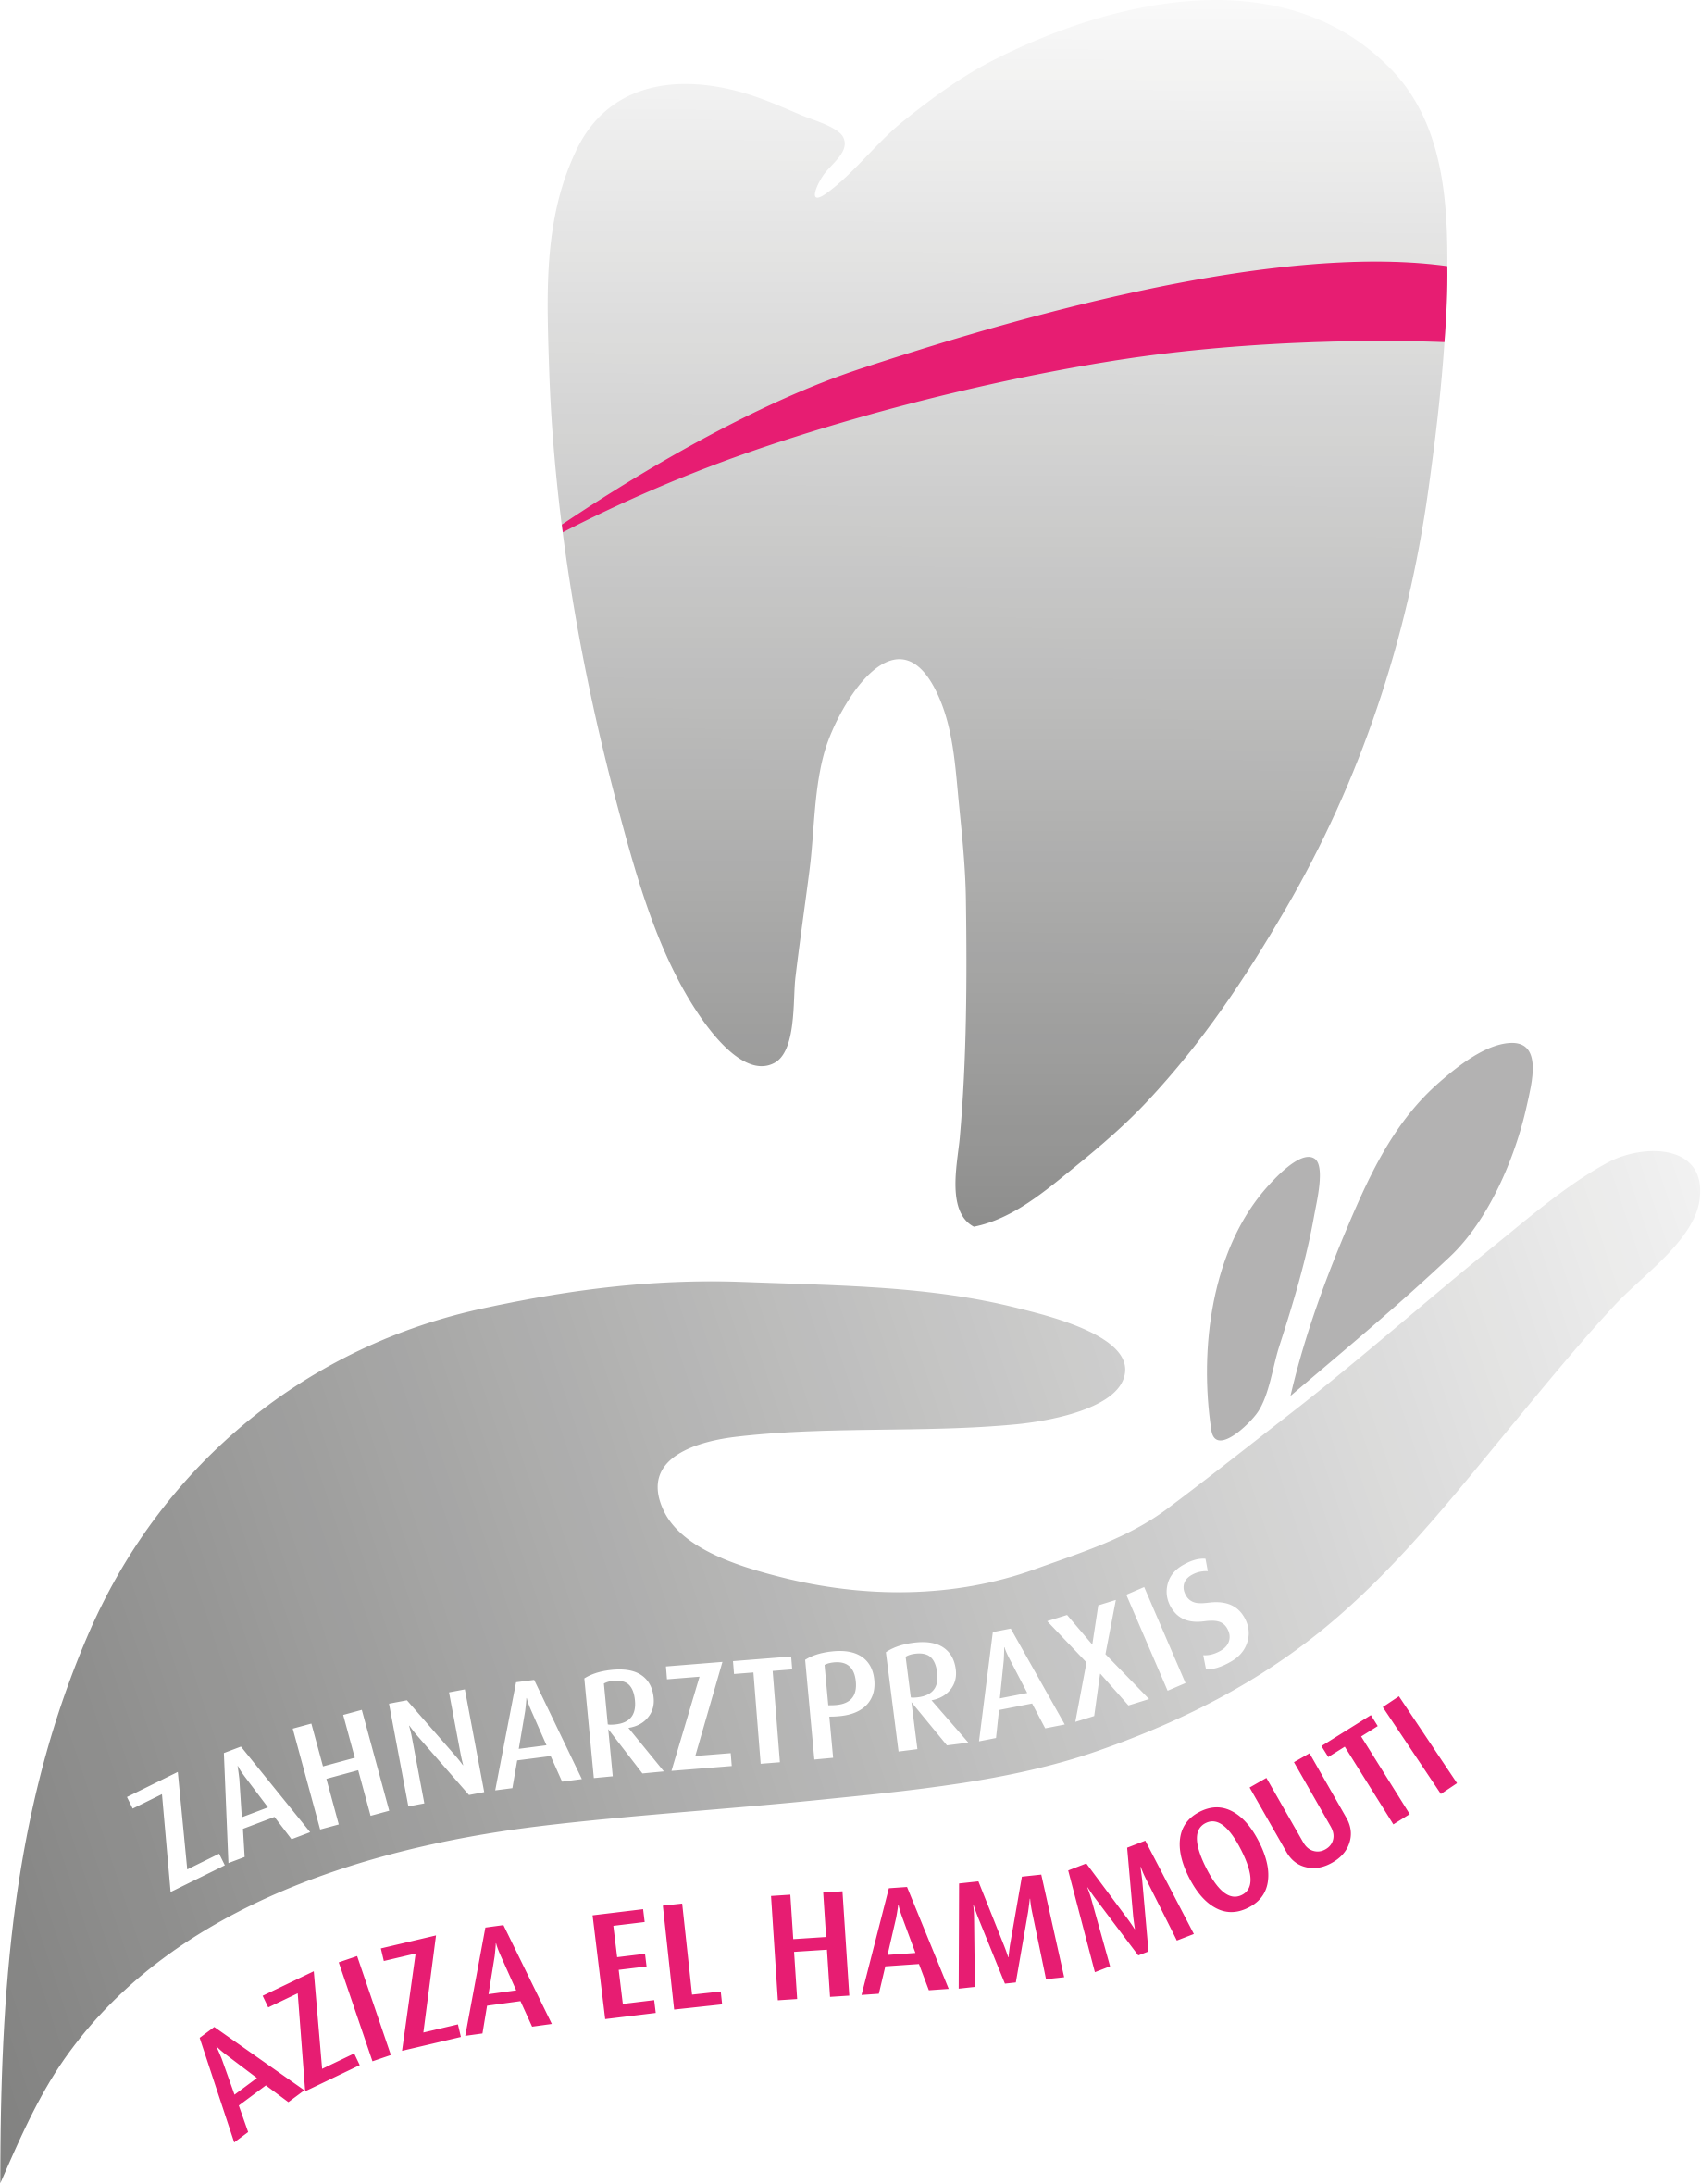 Zahnarztpraxis Aziza El Hammouti